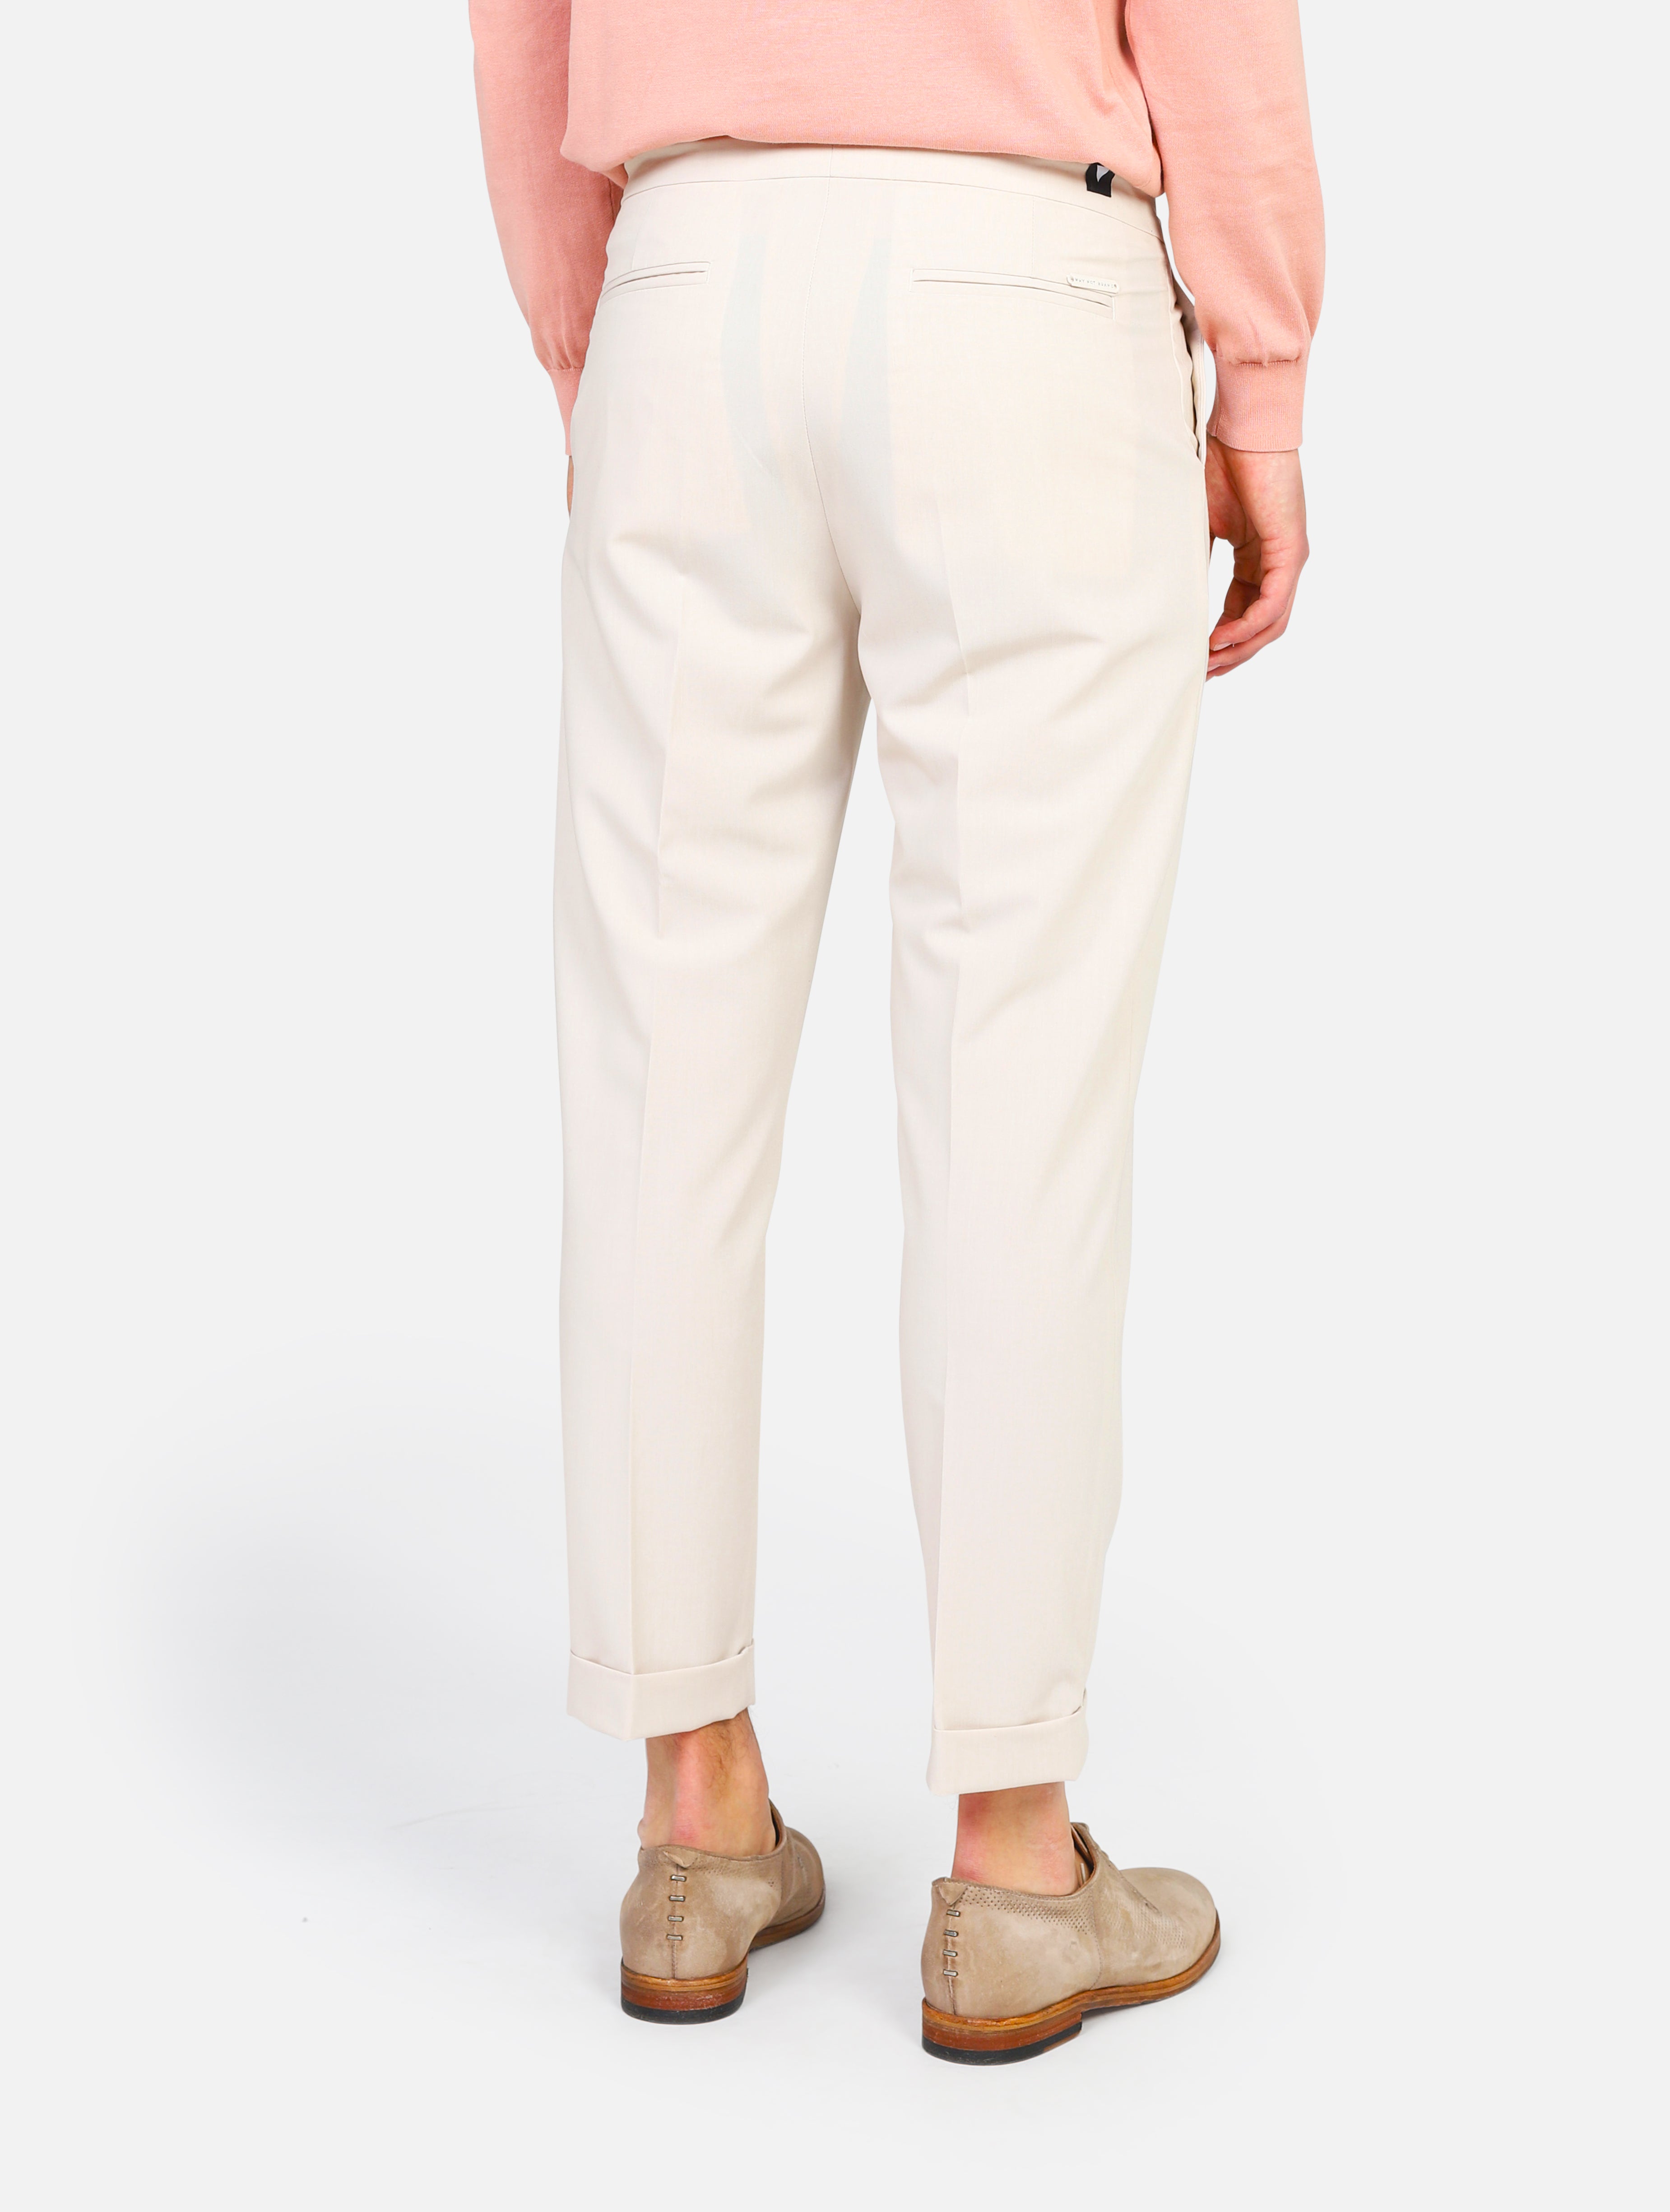 Pantalone why not brand -  beige man  - 3